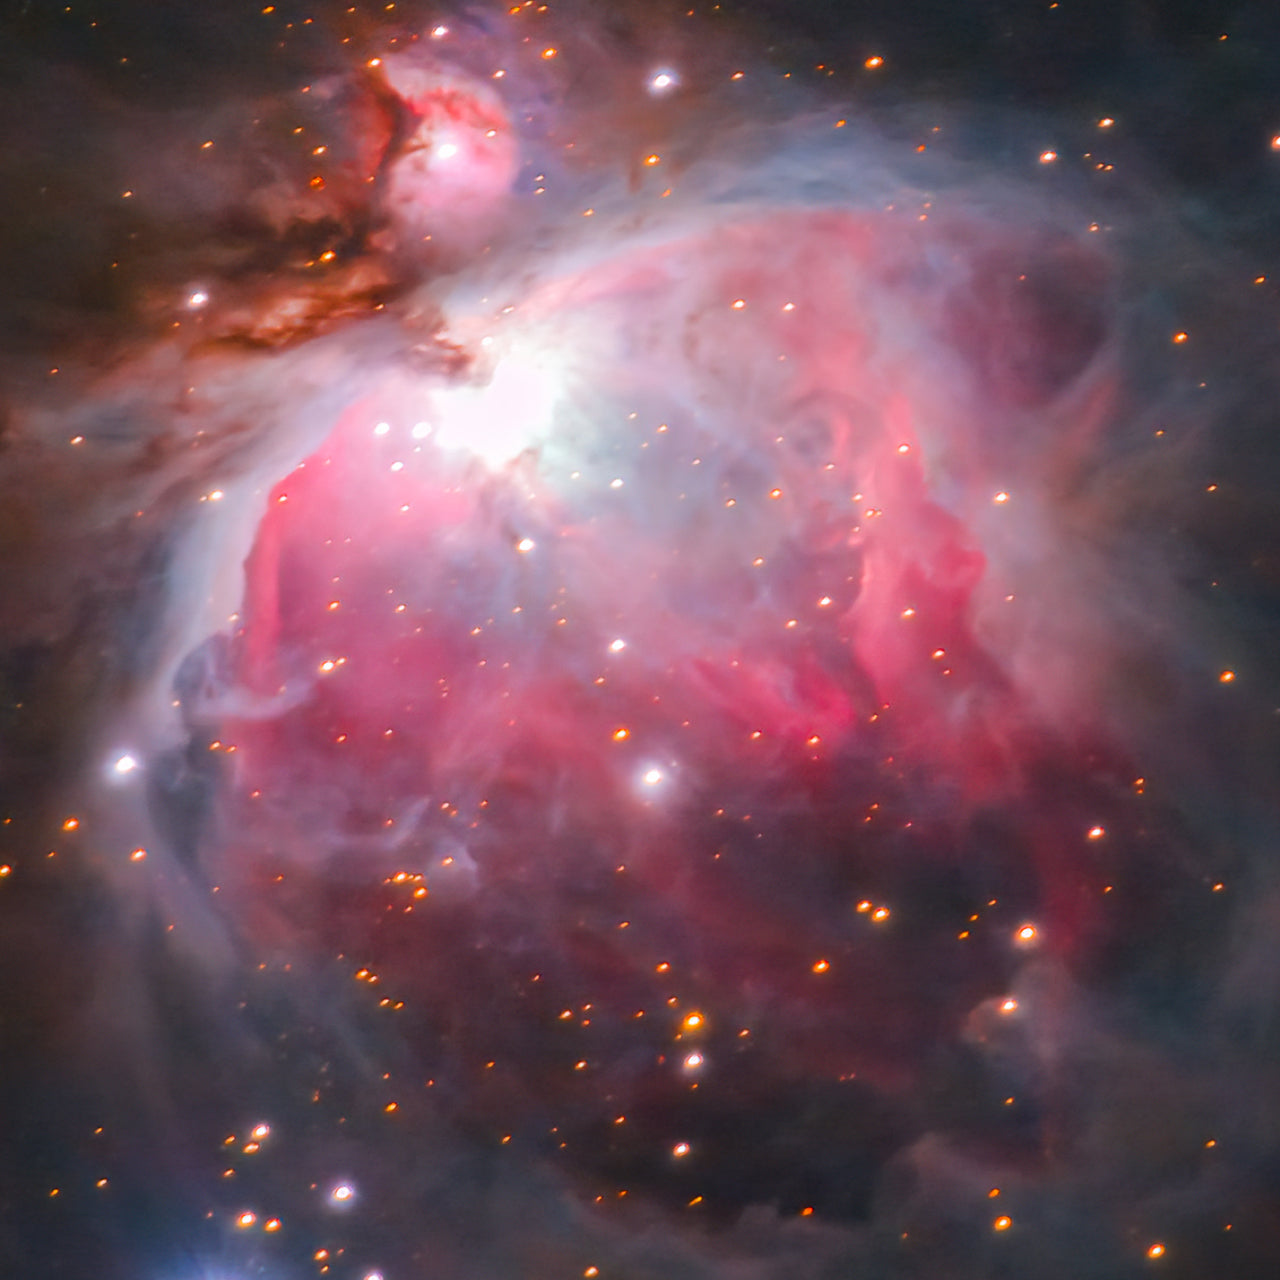 1000 Orion Nebula Pictures  Download Free Images on Unsplash